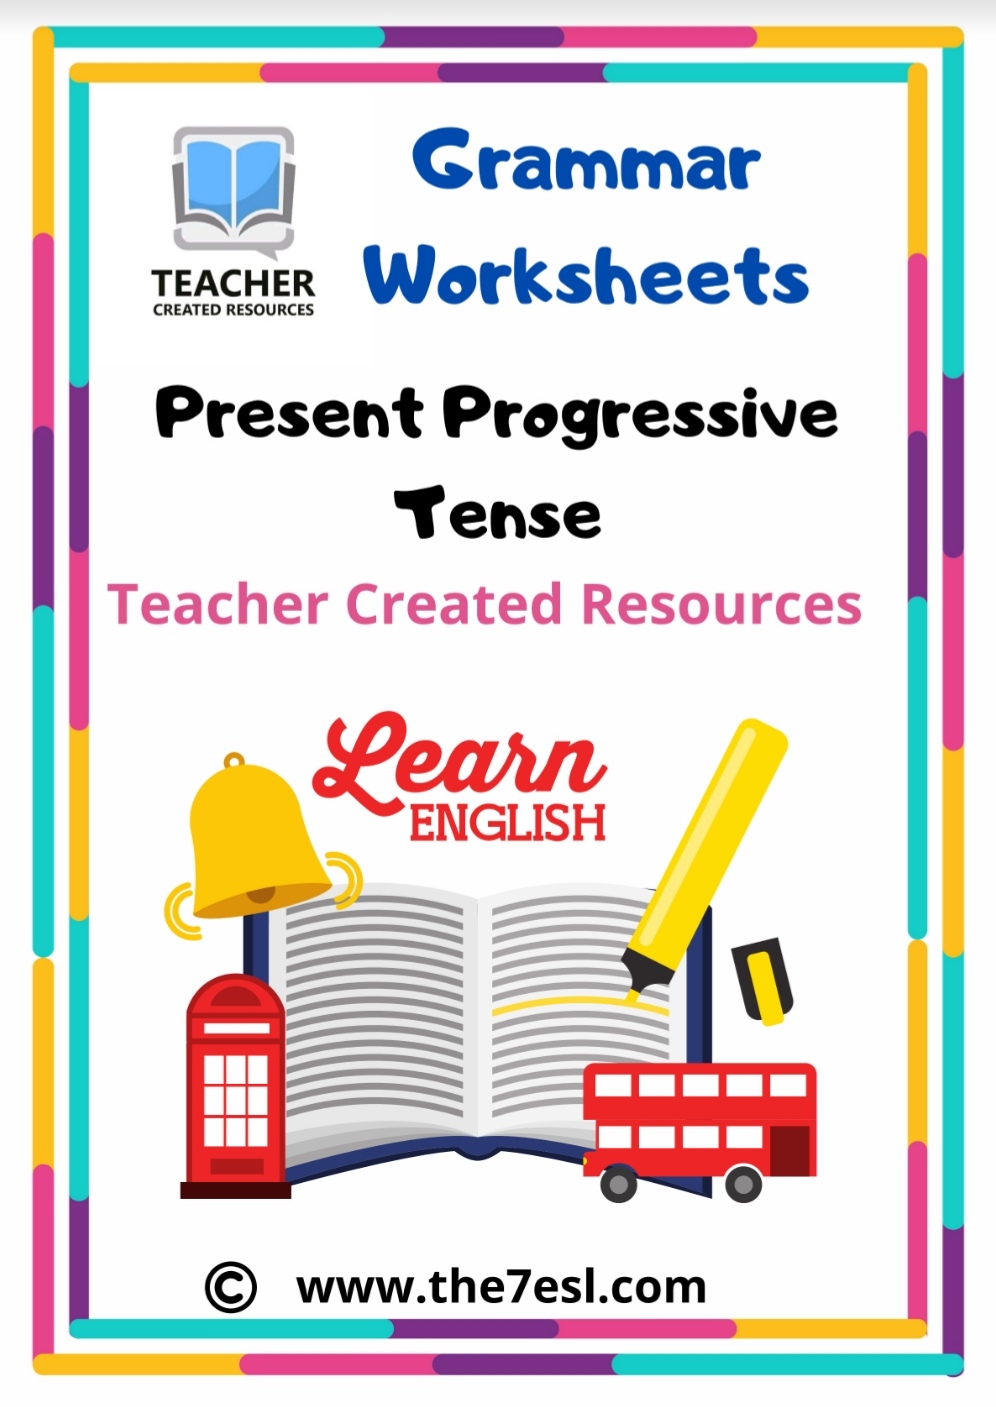 grammar-worksheets-present-progressive-tense